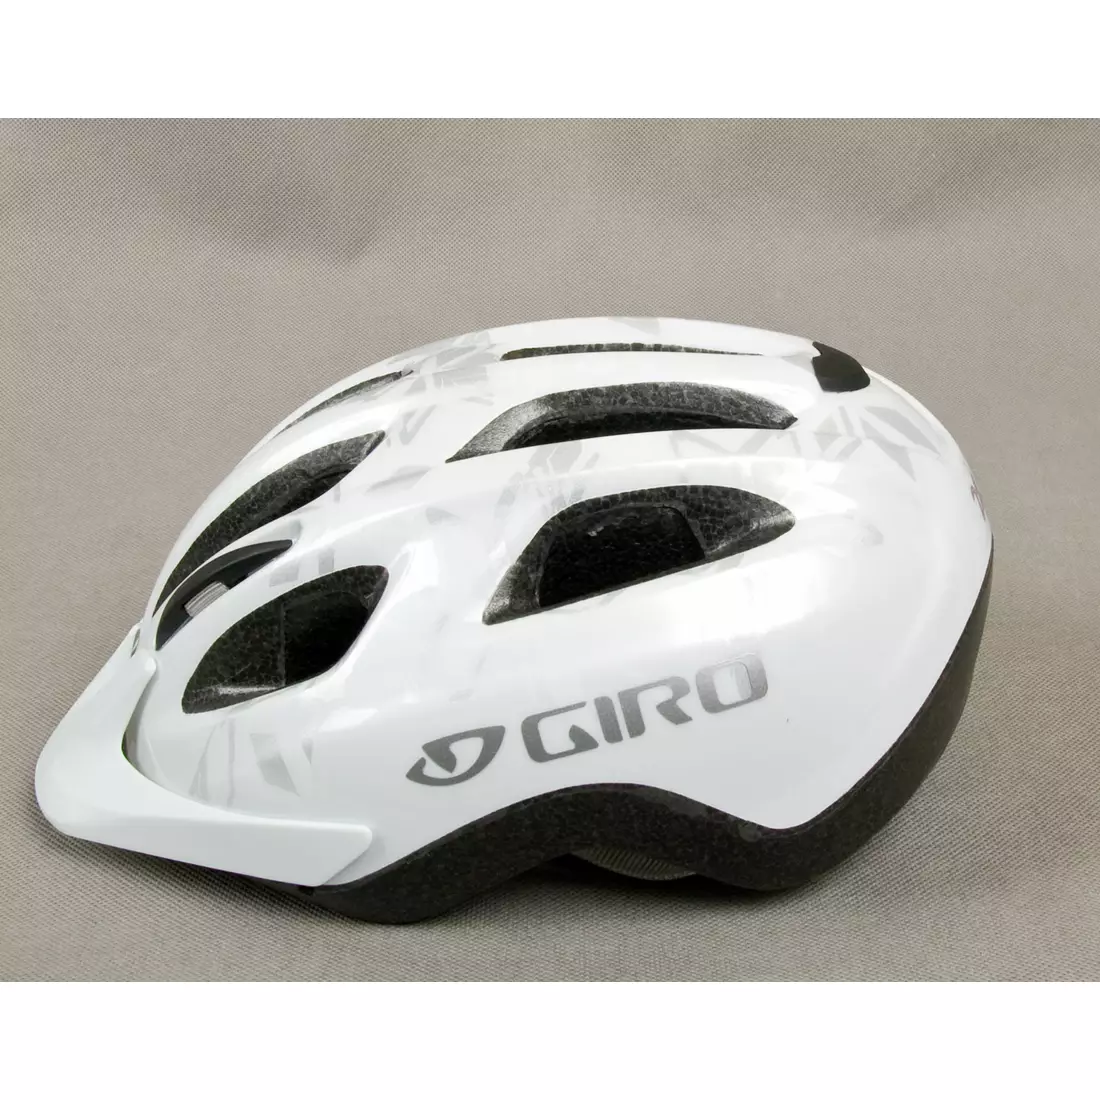 GIRO VENUS II women's bicycle helmet, color: White and silver